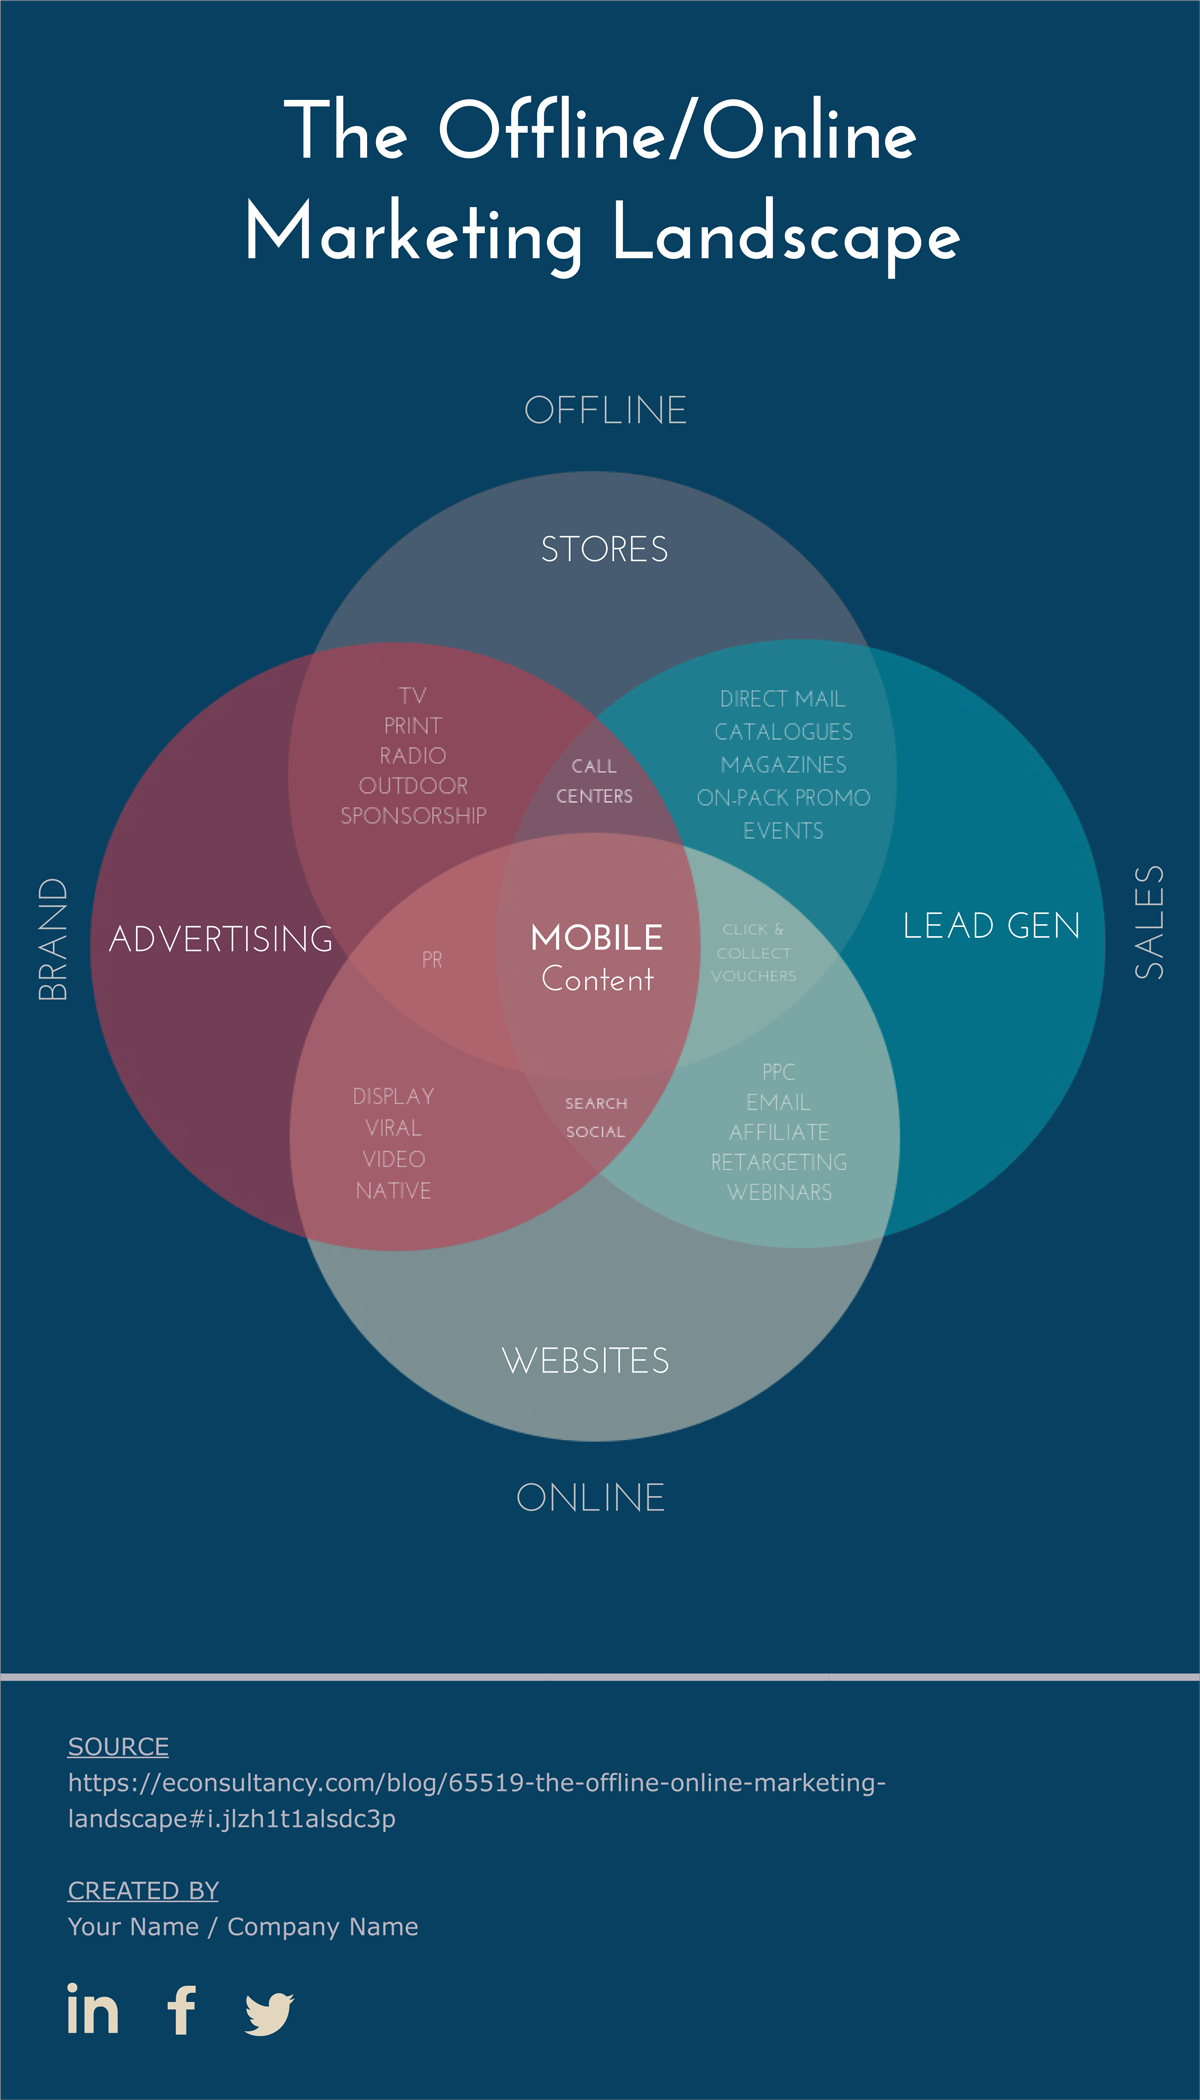 The Offline/Online Marketing Landscape Venn diagram